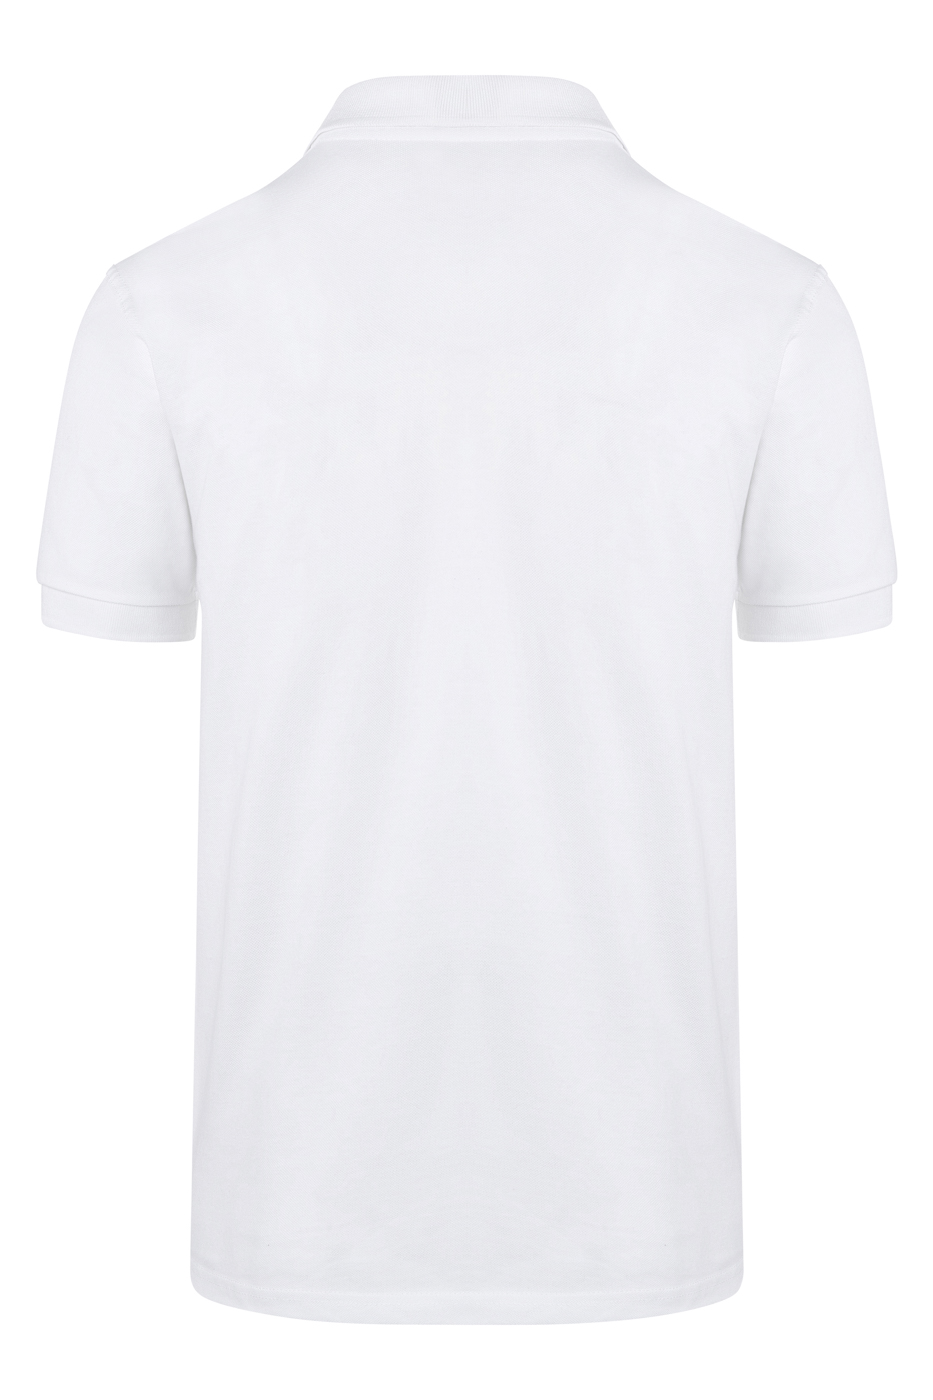 Herren Workwear Poloshirt Basic - Größe: M